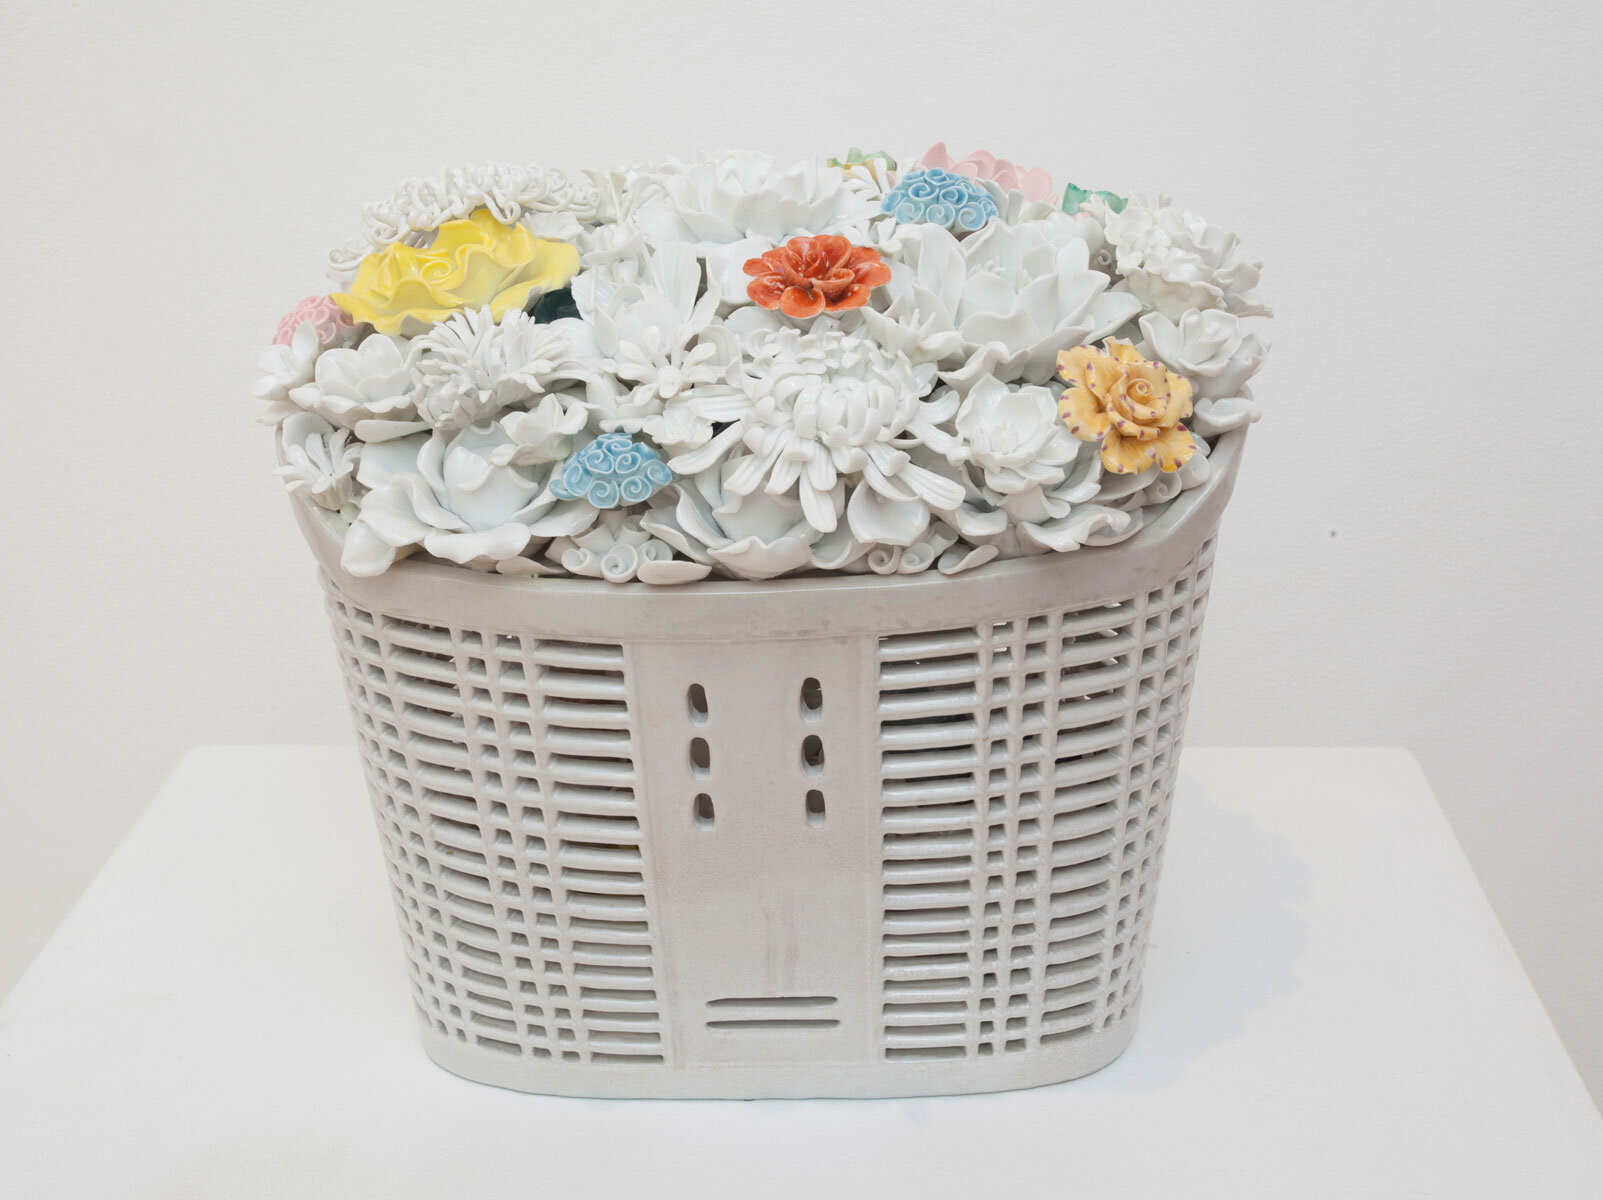 ai-weiwei-bicycle-basket-flowers-porcelain.jpg